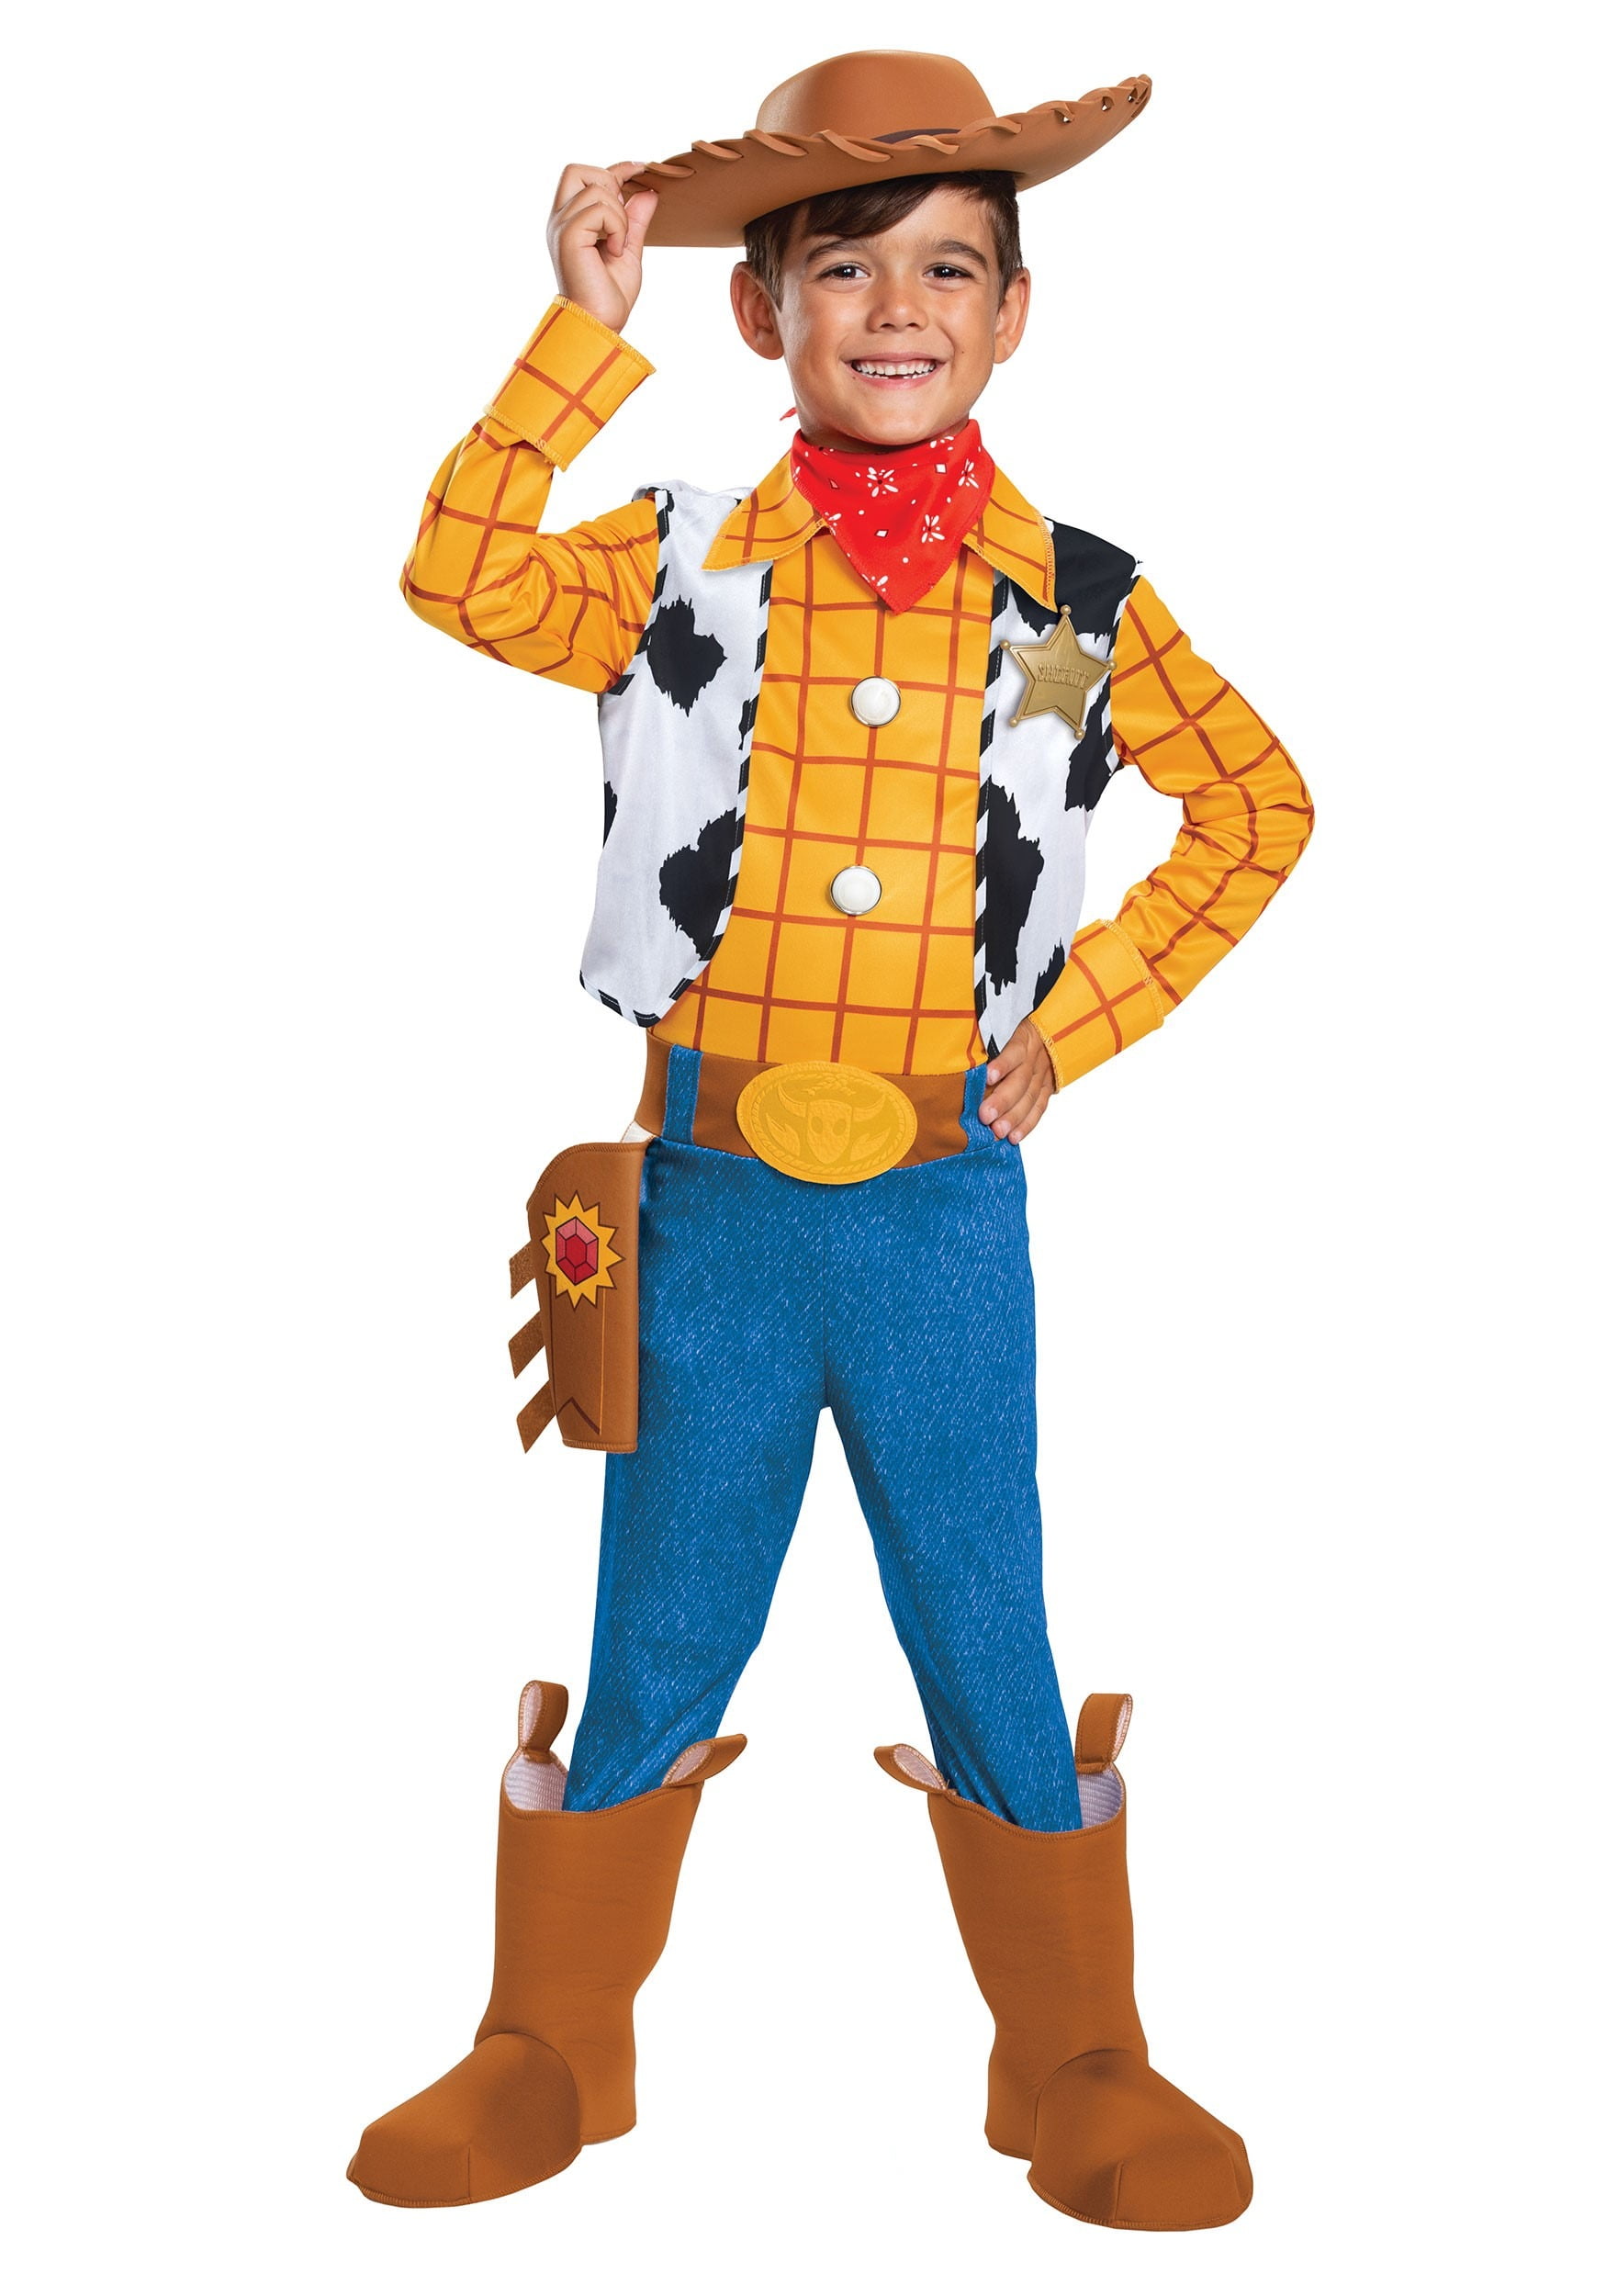 Men's Disney Pixar Toy Story Woody Cow Print Jumpsuit with Hat